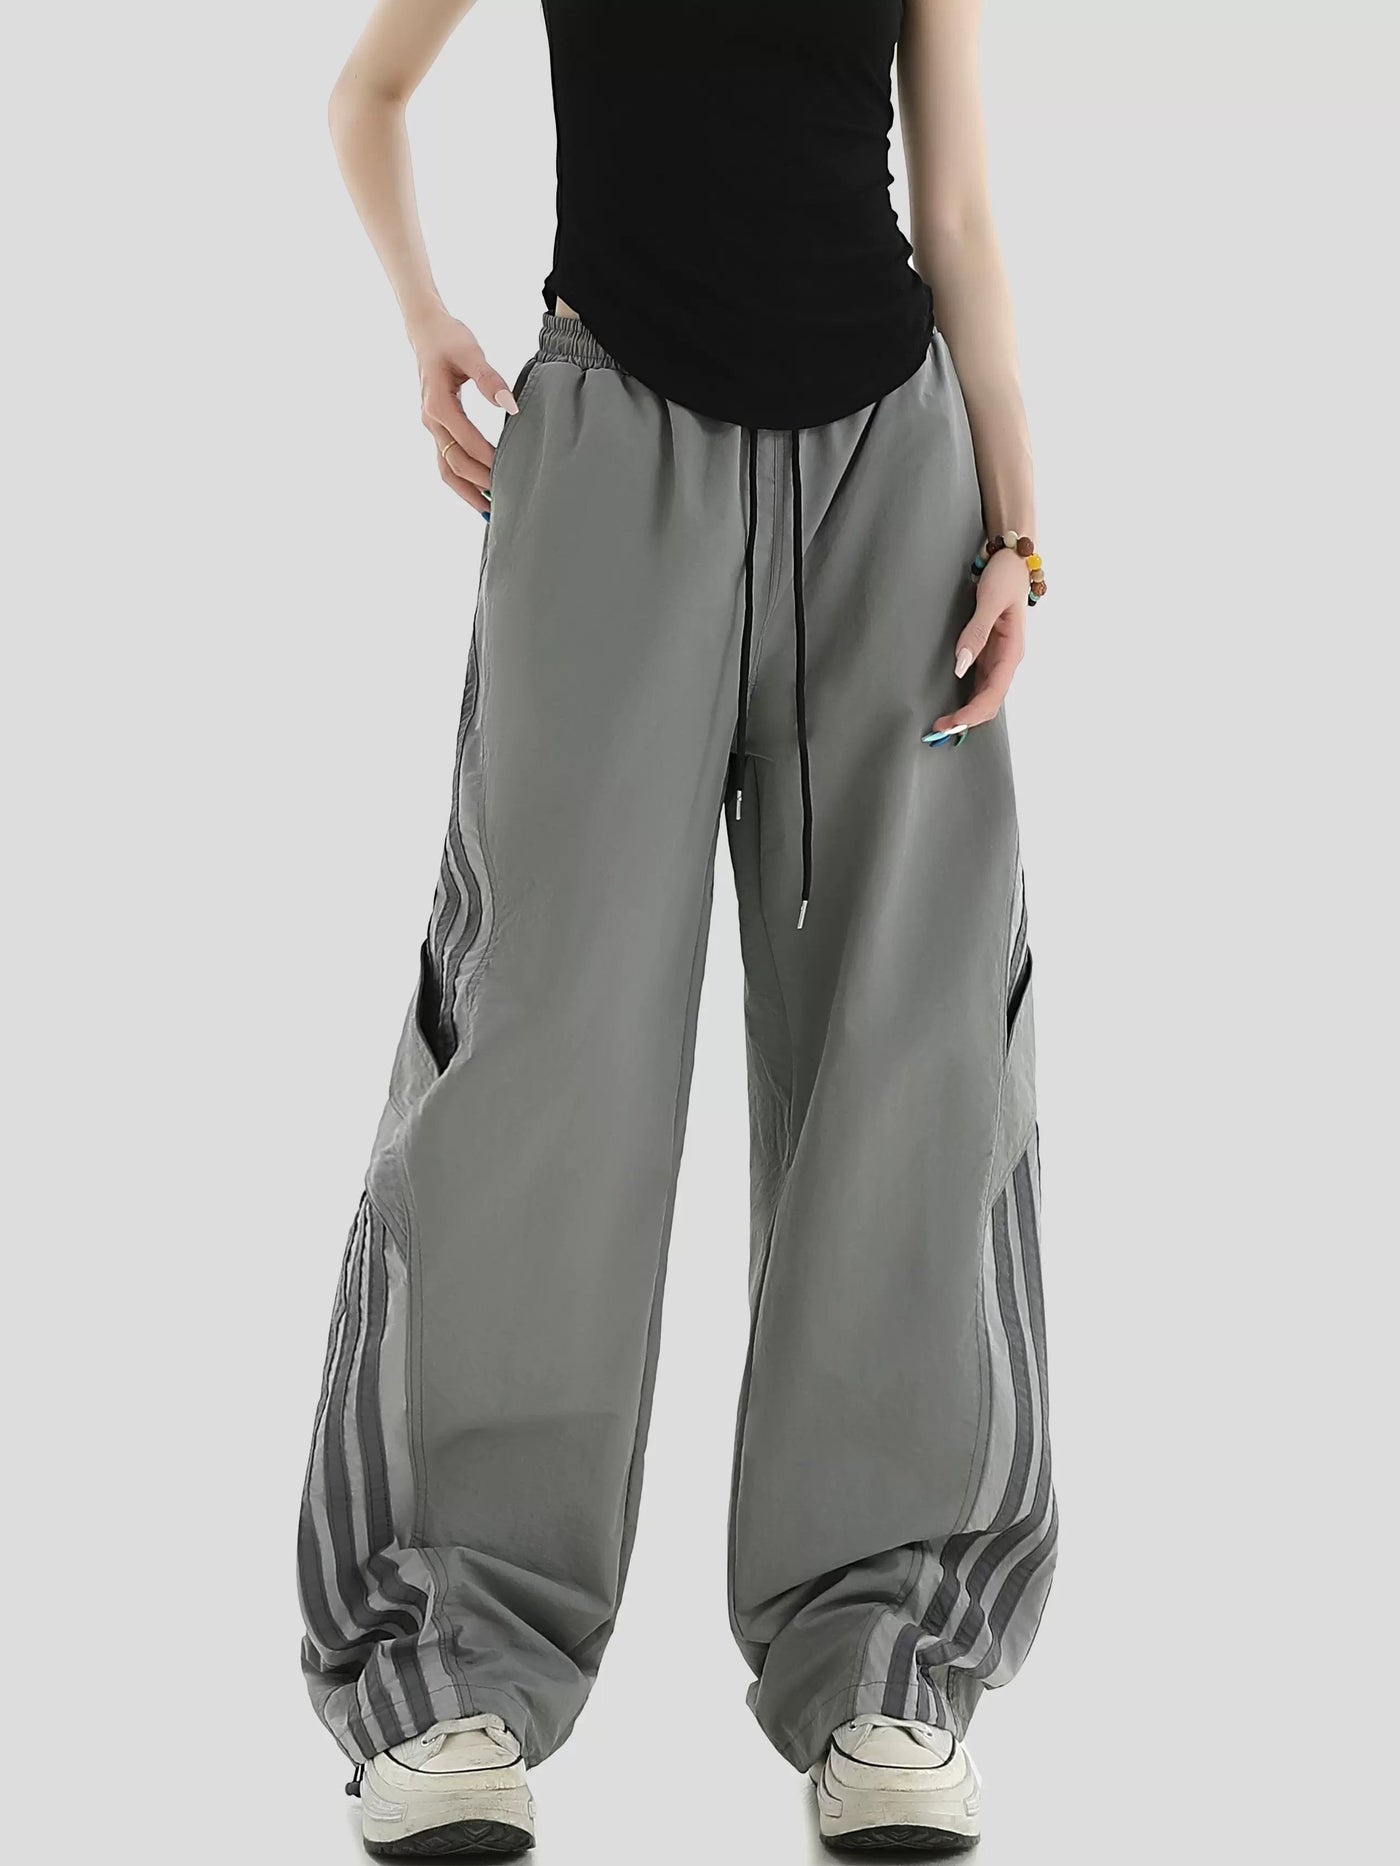 Striped Side Track Pants Korean Street Fashion Pants By INS Korea Shop Online at OH Vault